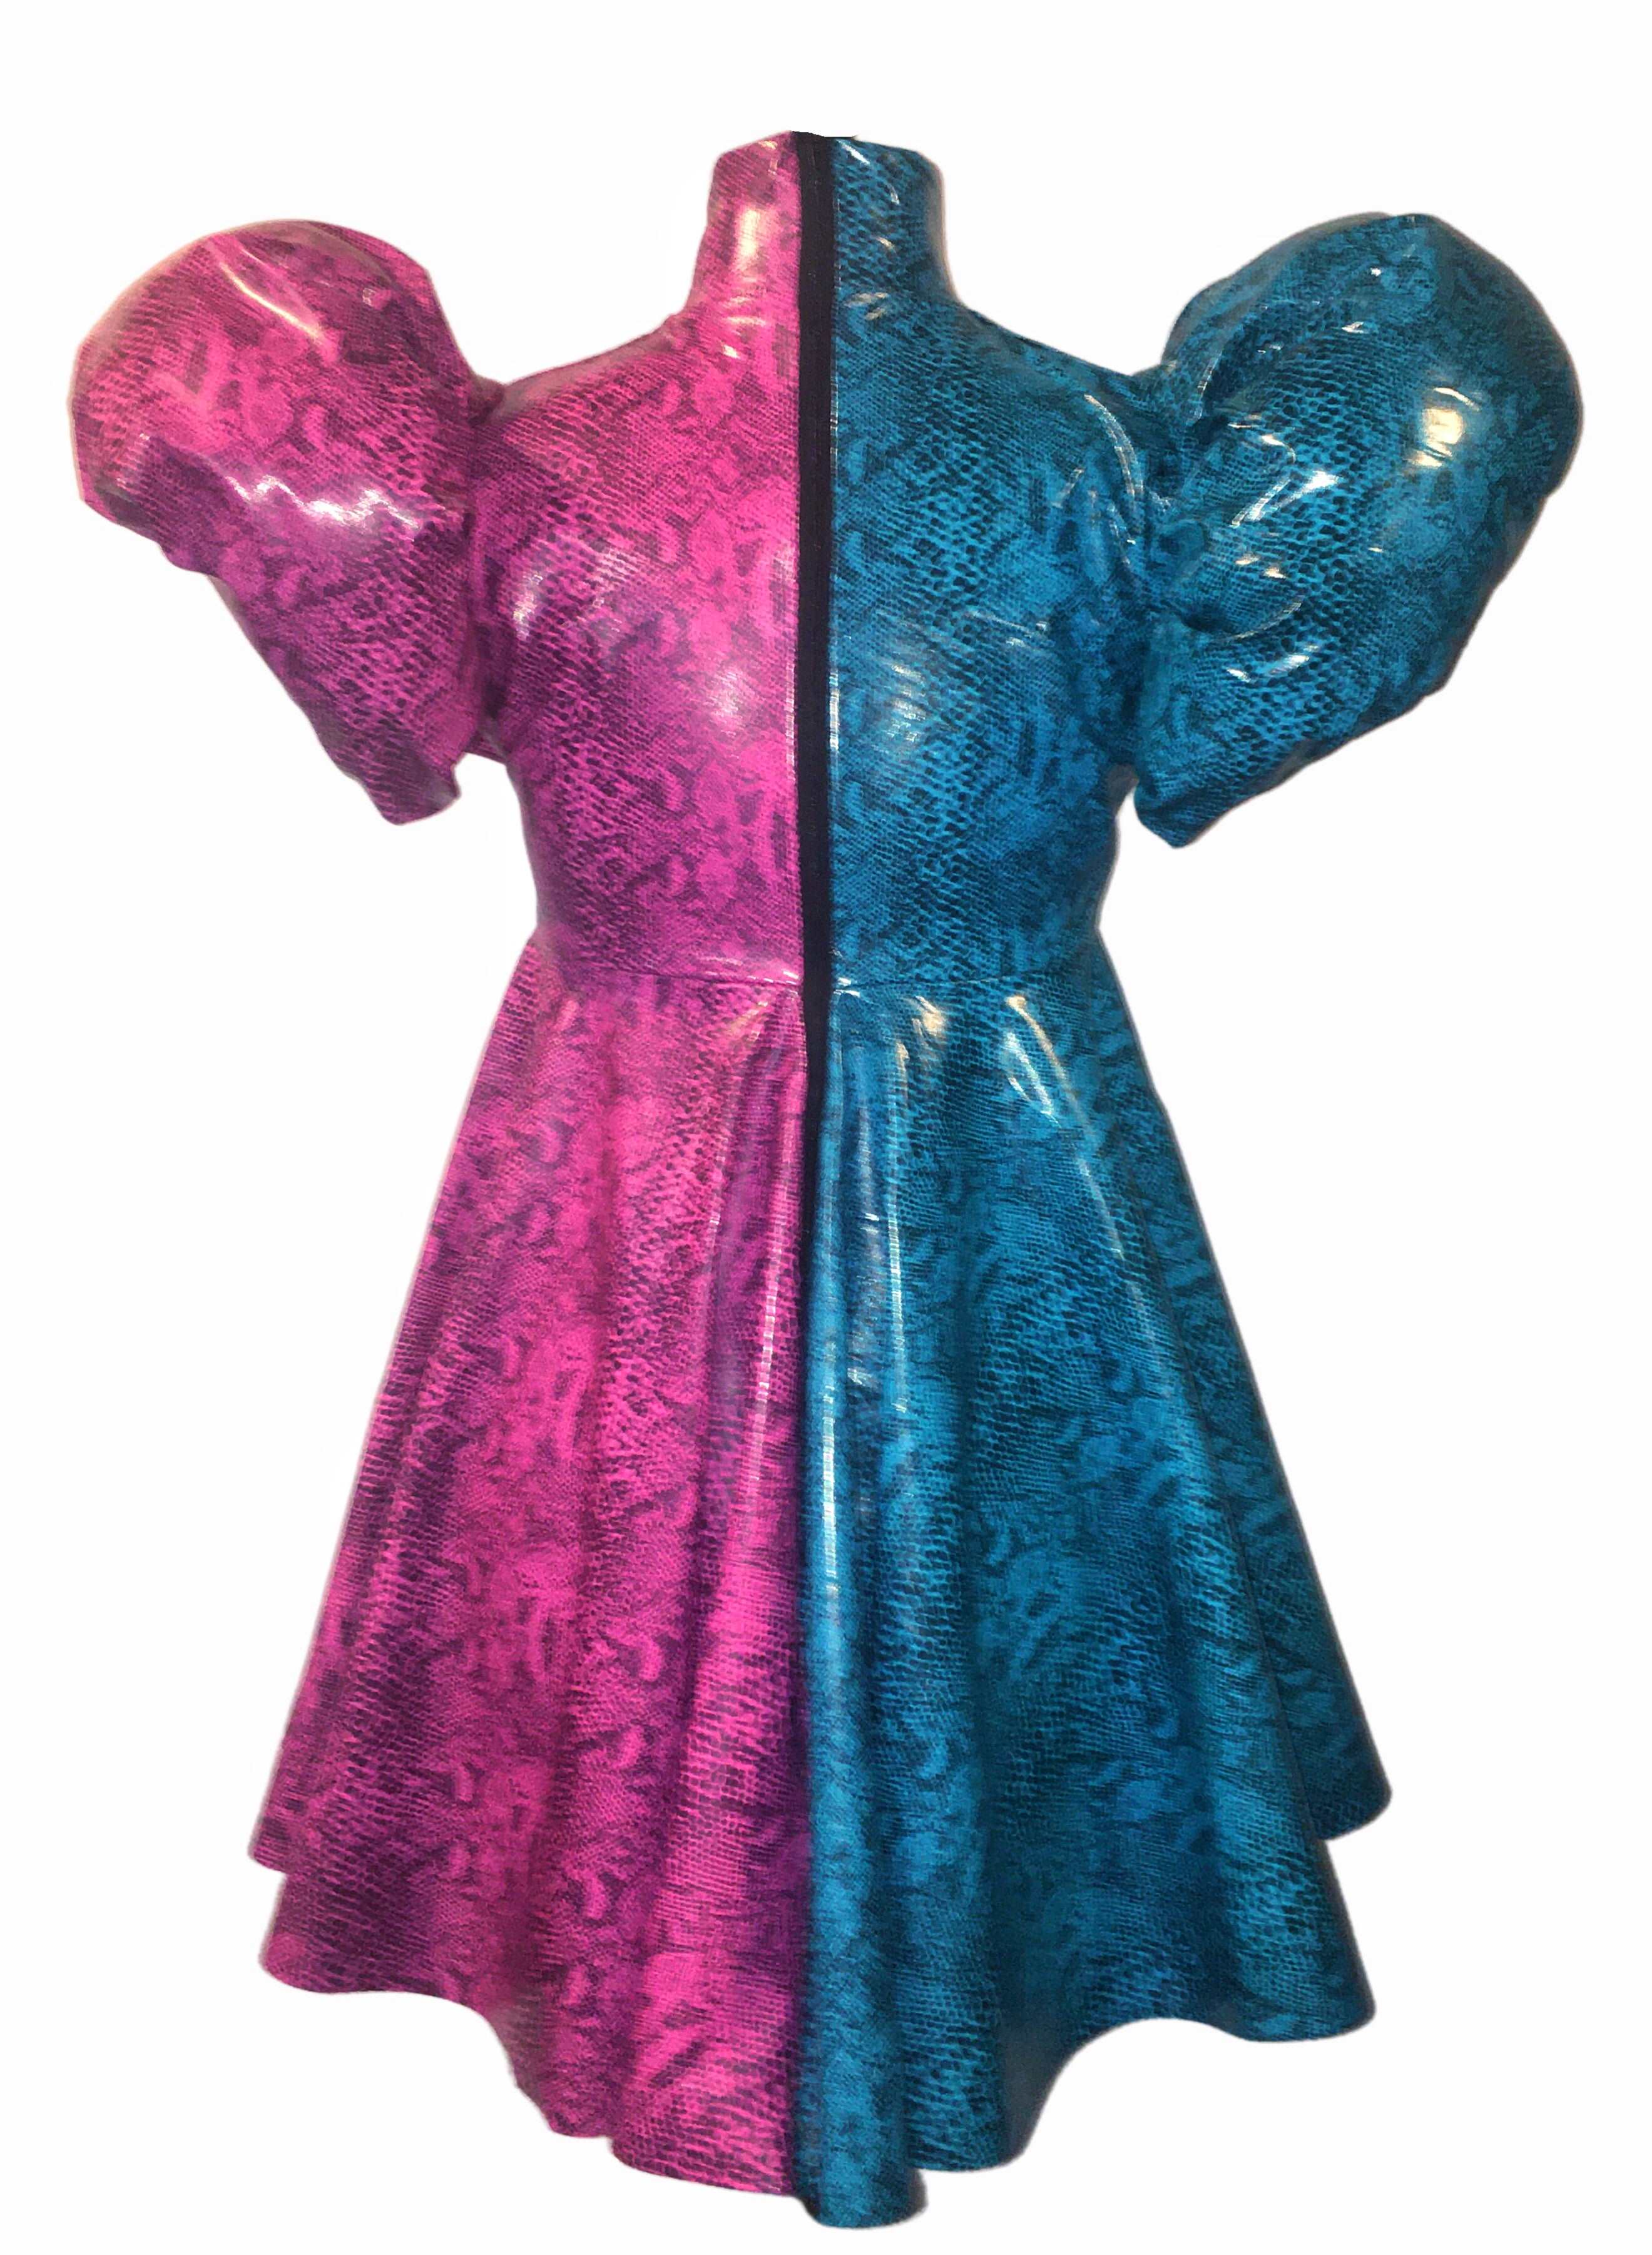 DOLL - Blue/Pink Dress